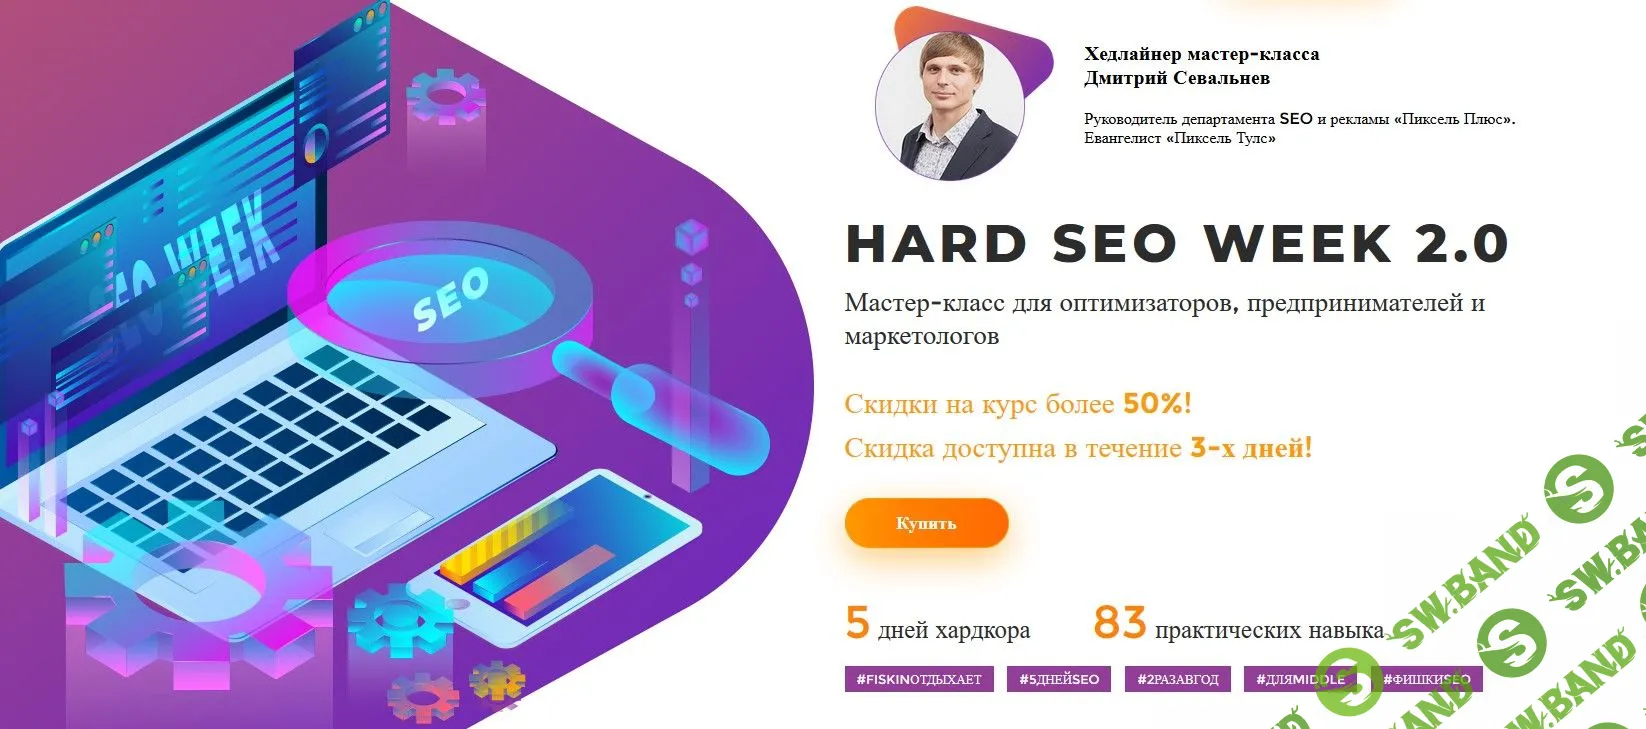 [Search Engine Education] Hard seo week 2.0 - Октябрь (2019)